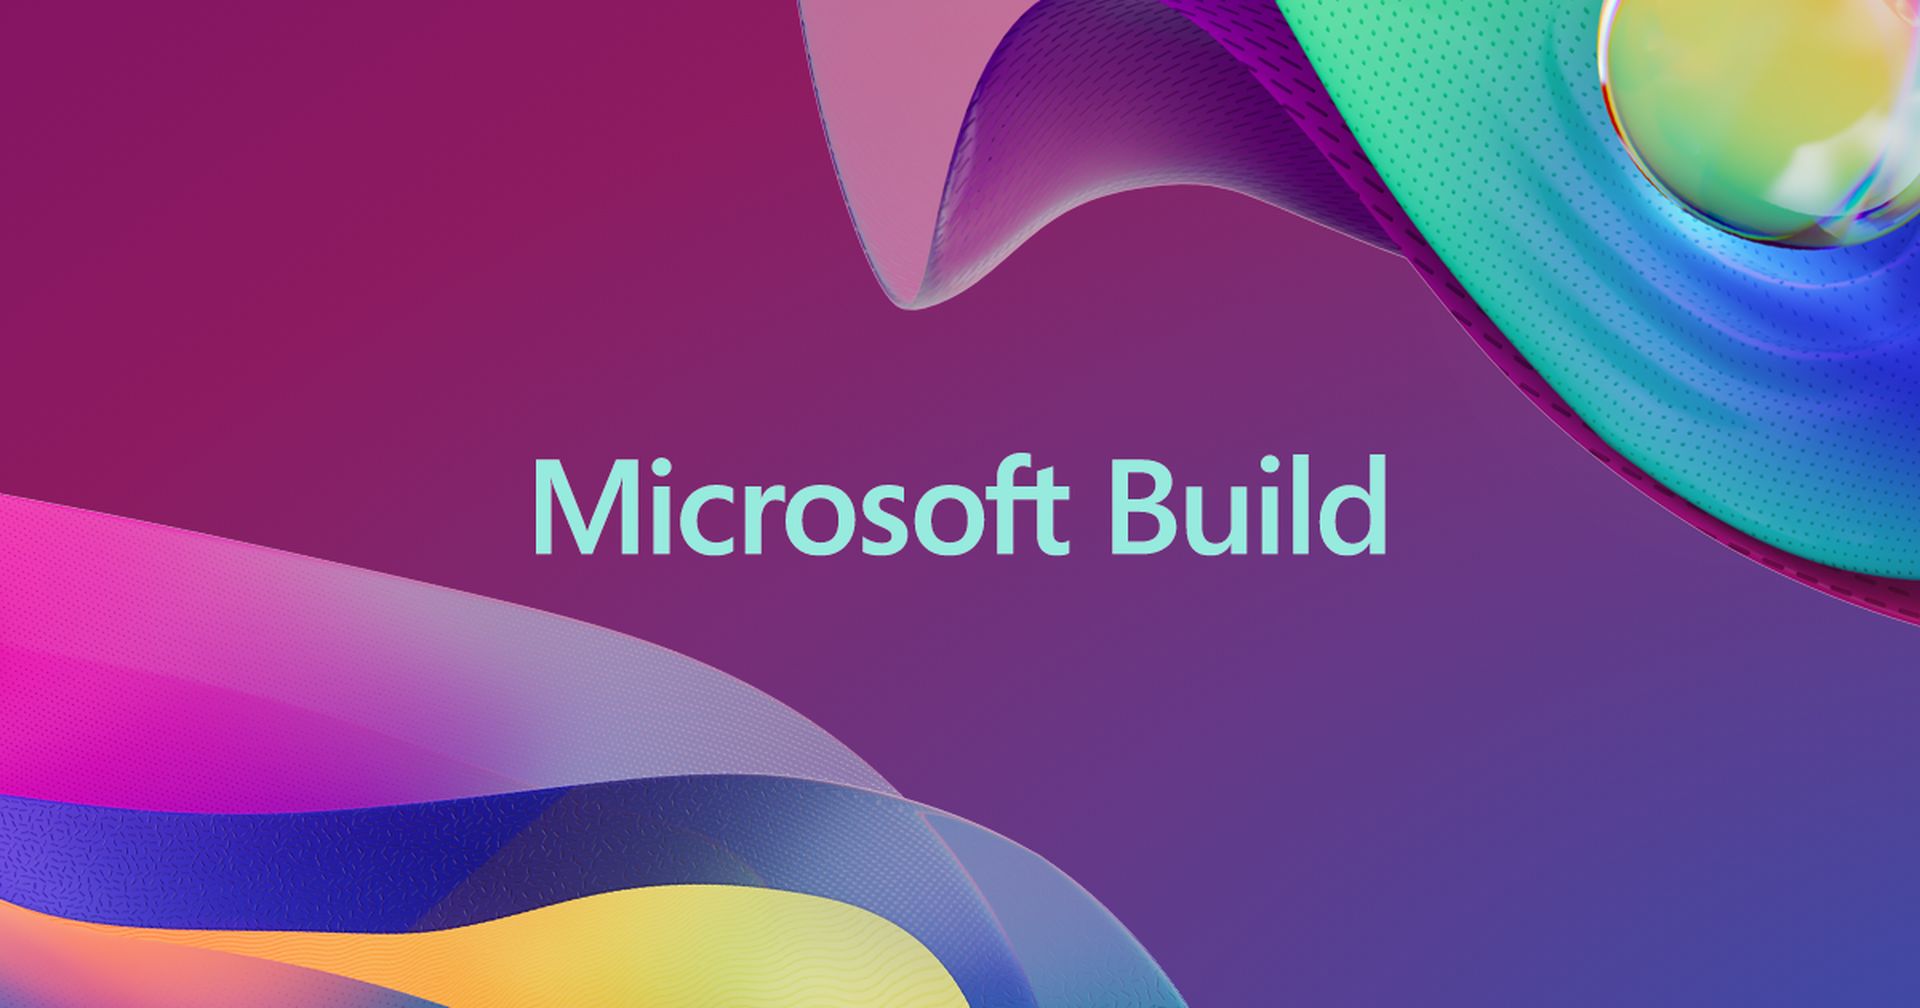 Sneak peek: What's next from Microsoft?